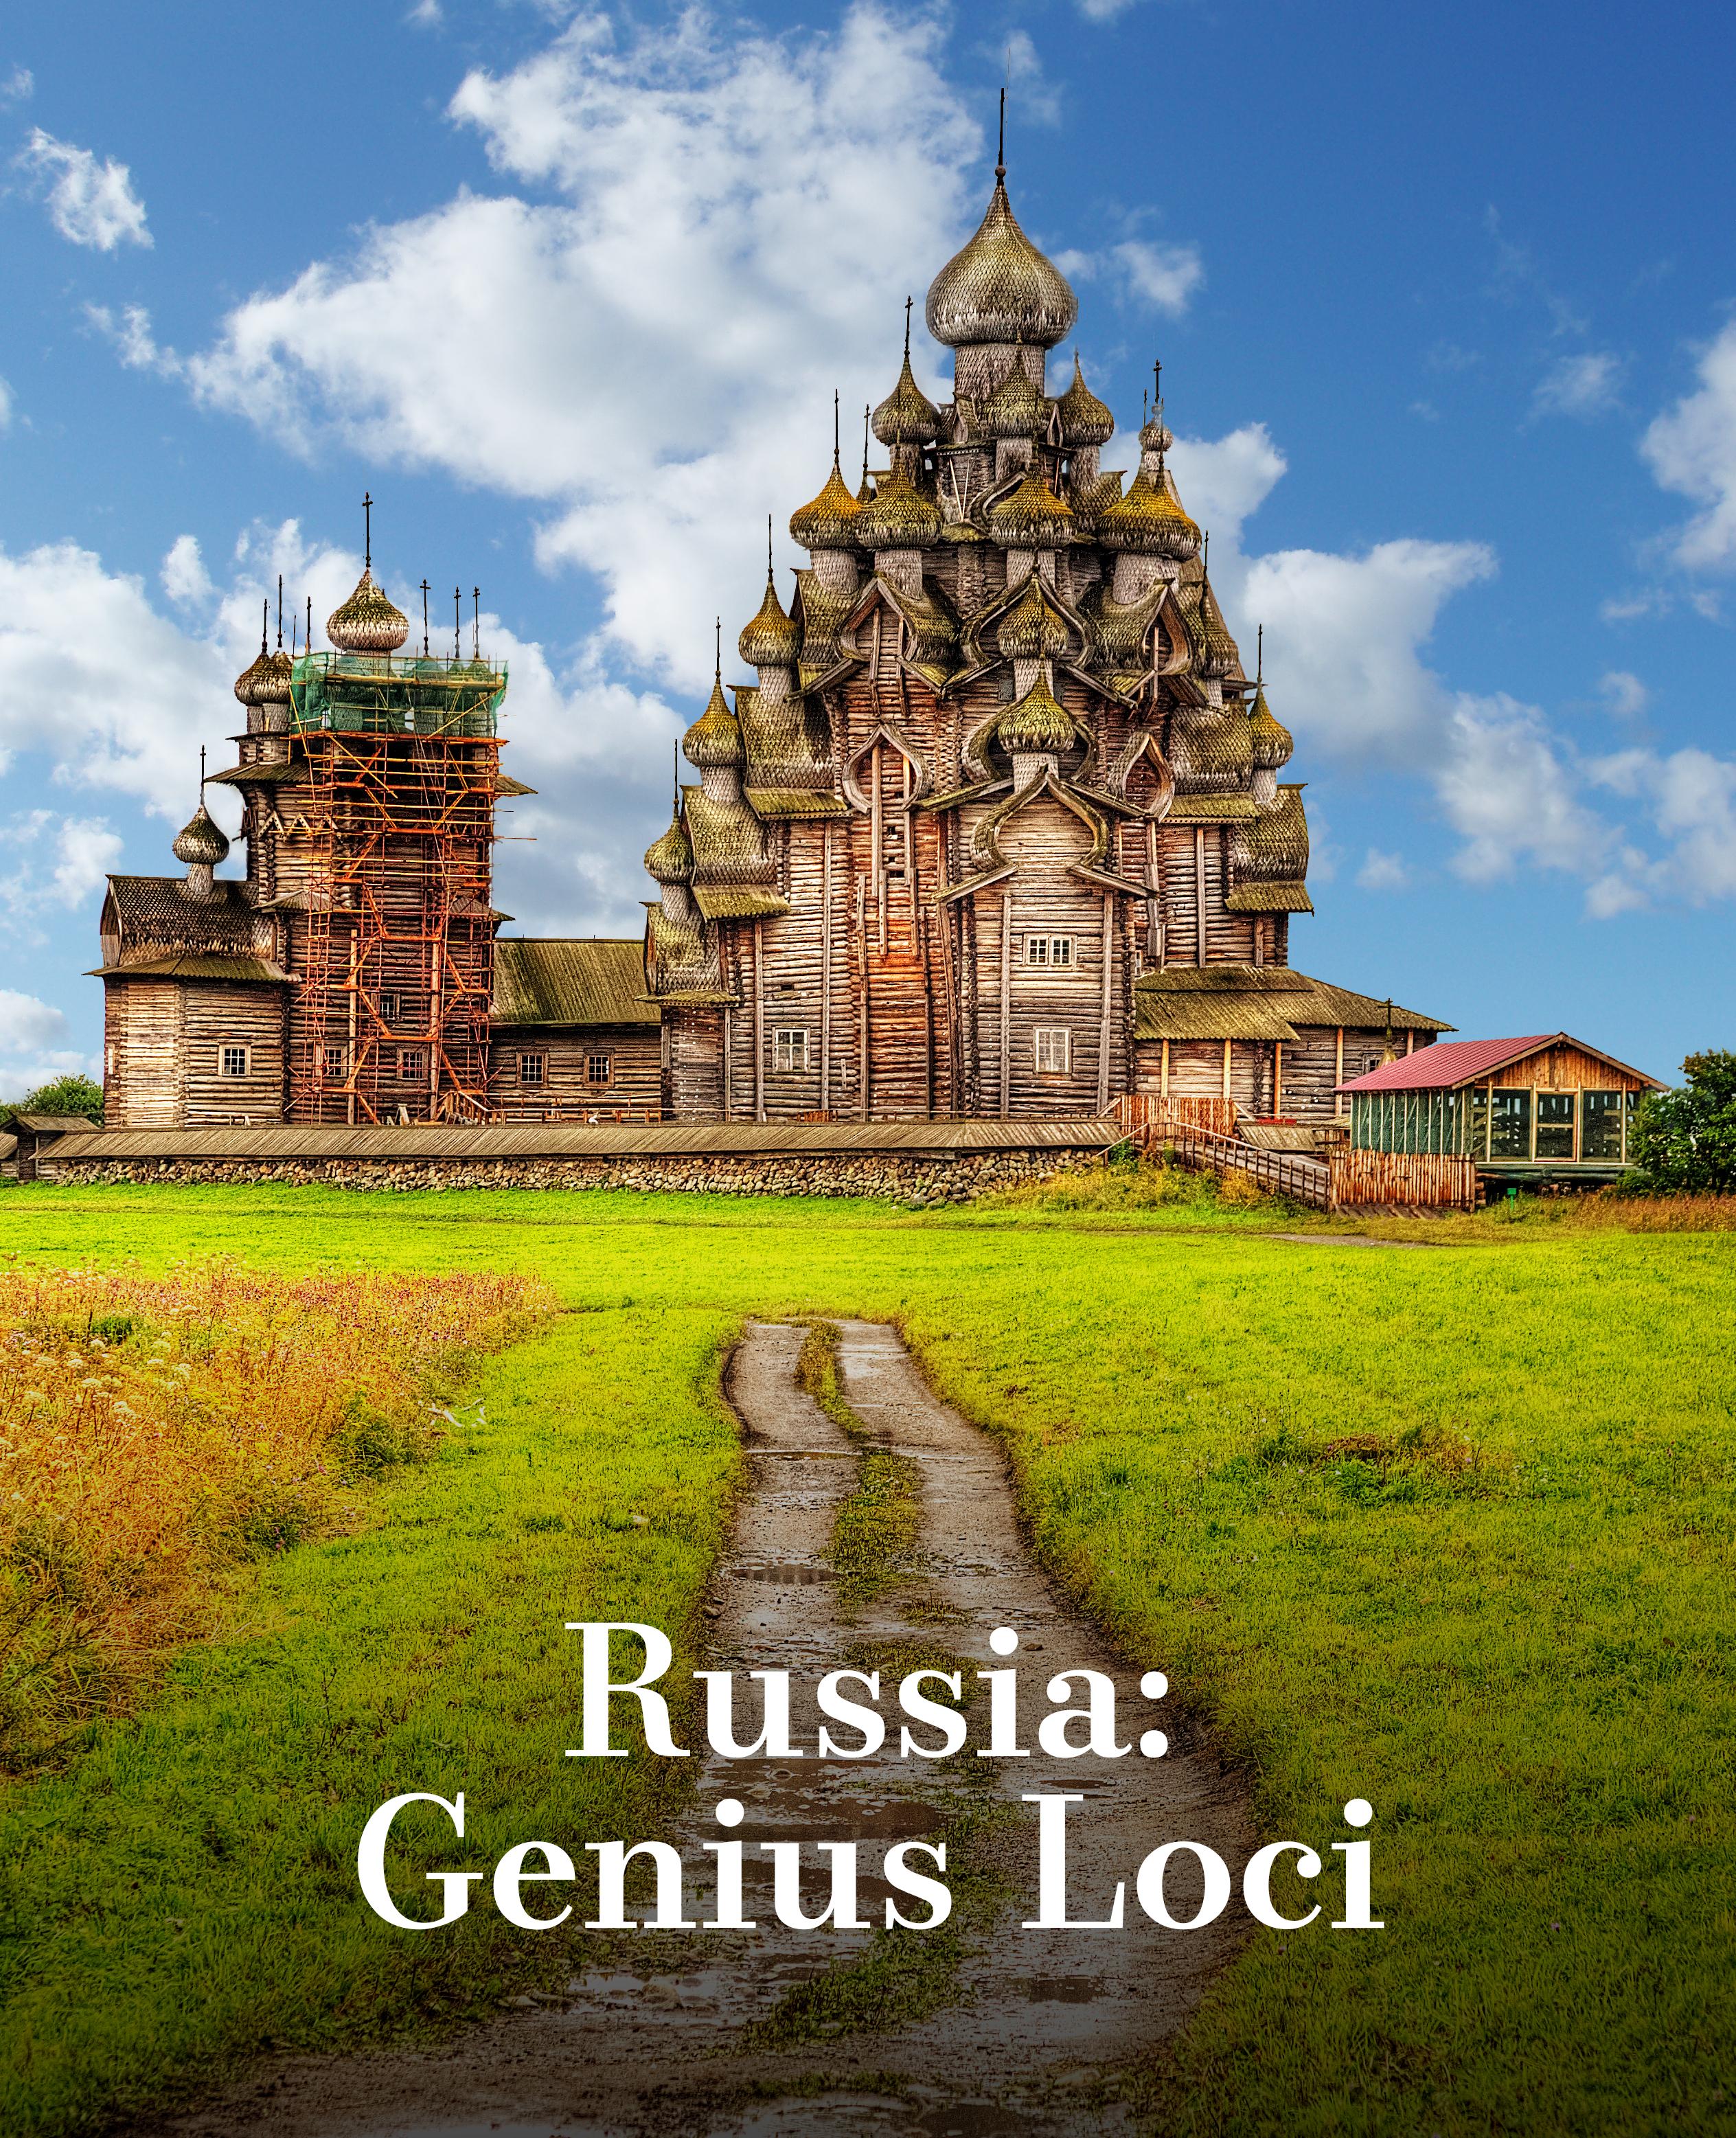 "RUSSIA: GENIUS LOCI" GOES TO THE BALKAN REGION